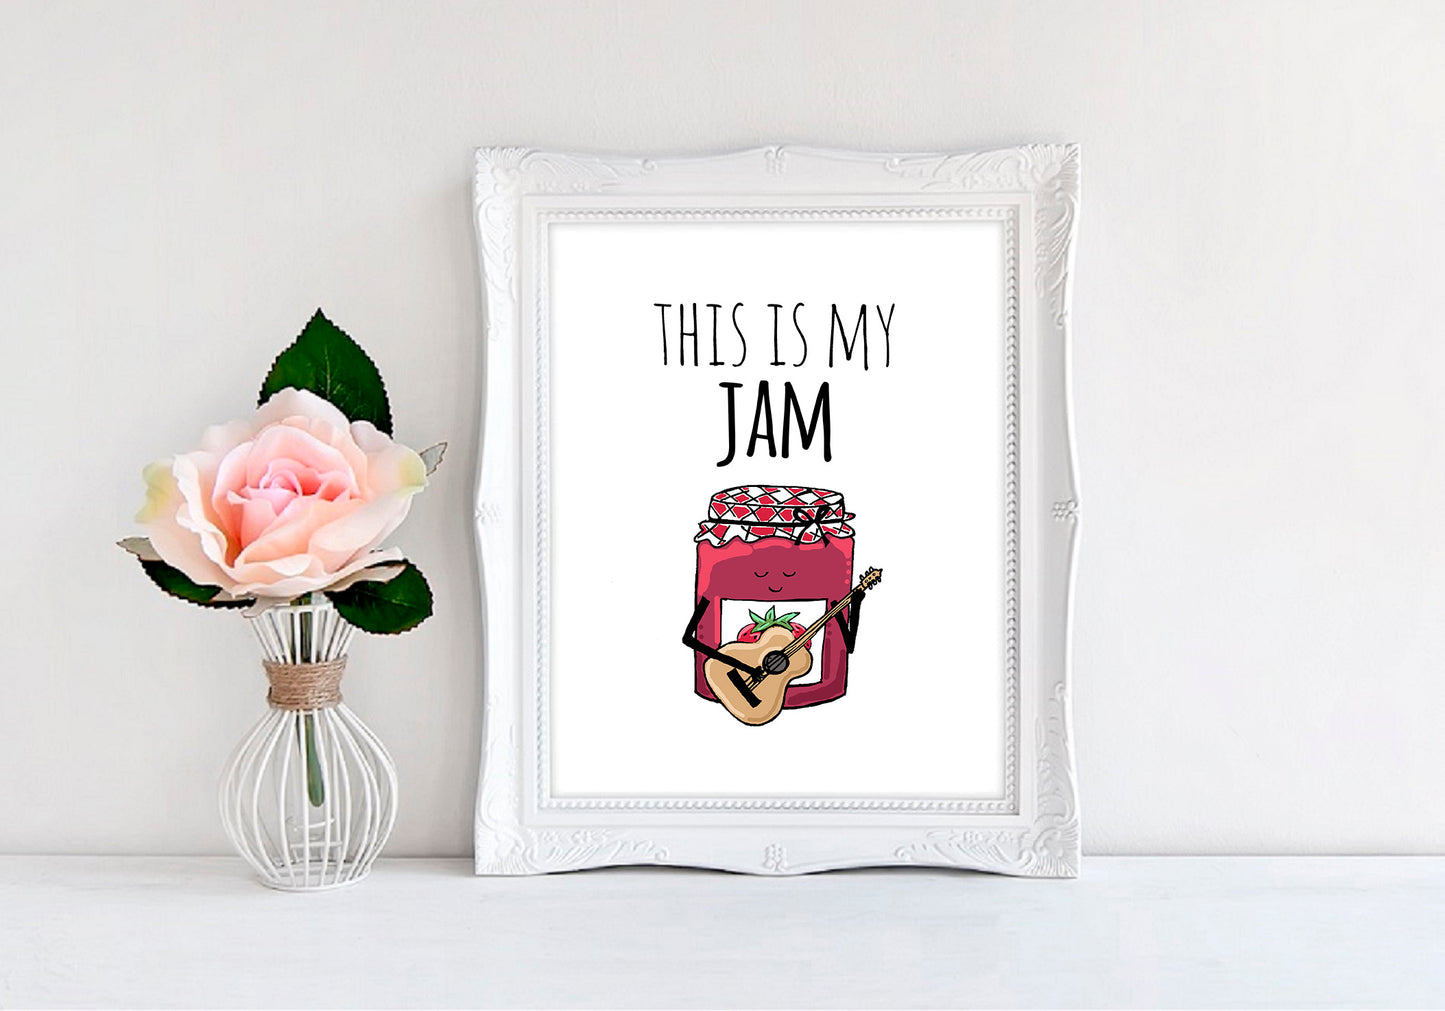 This Is My Jam (Guitar Playing Jar) - 8"x10" Wall Print - MoonlightMakers